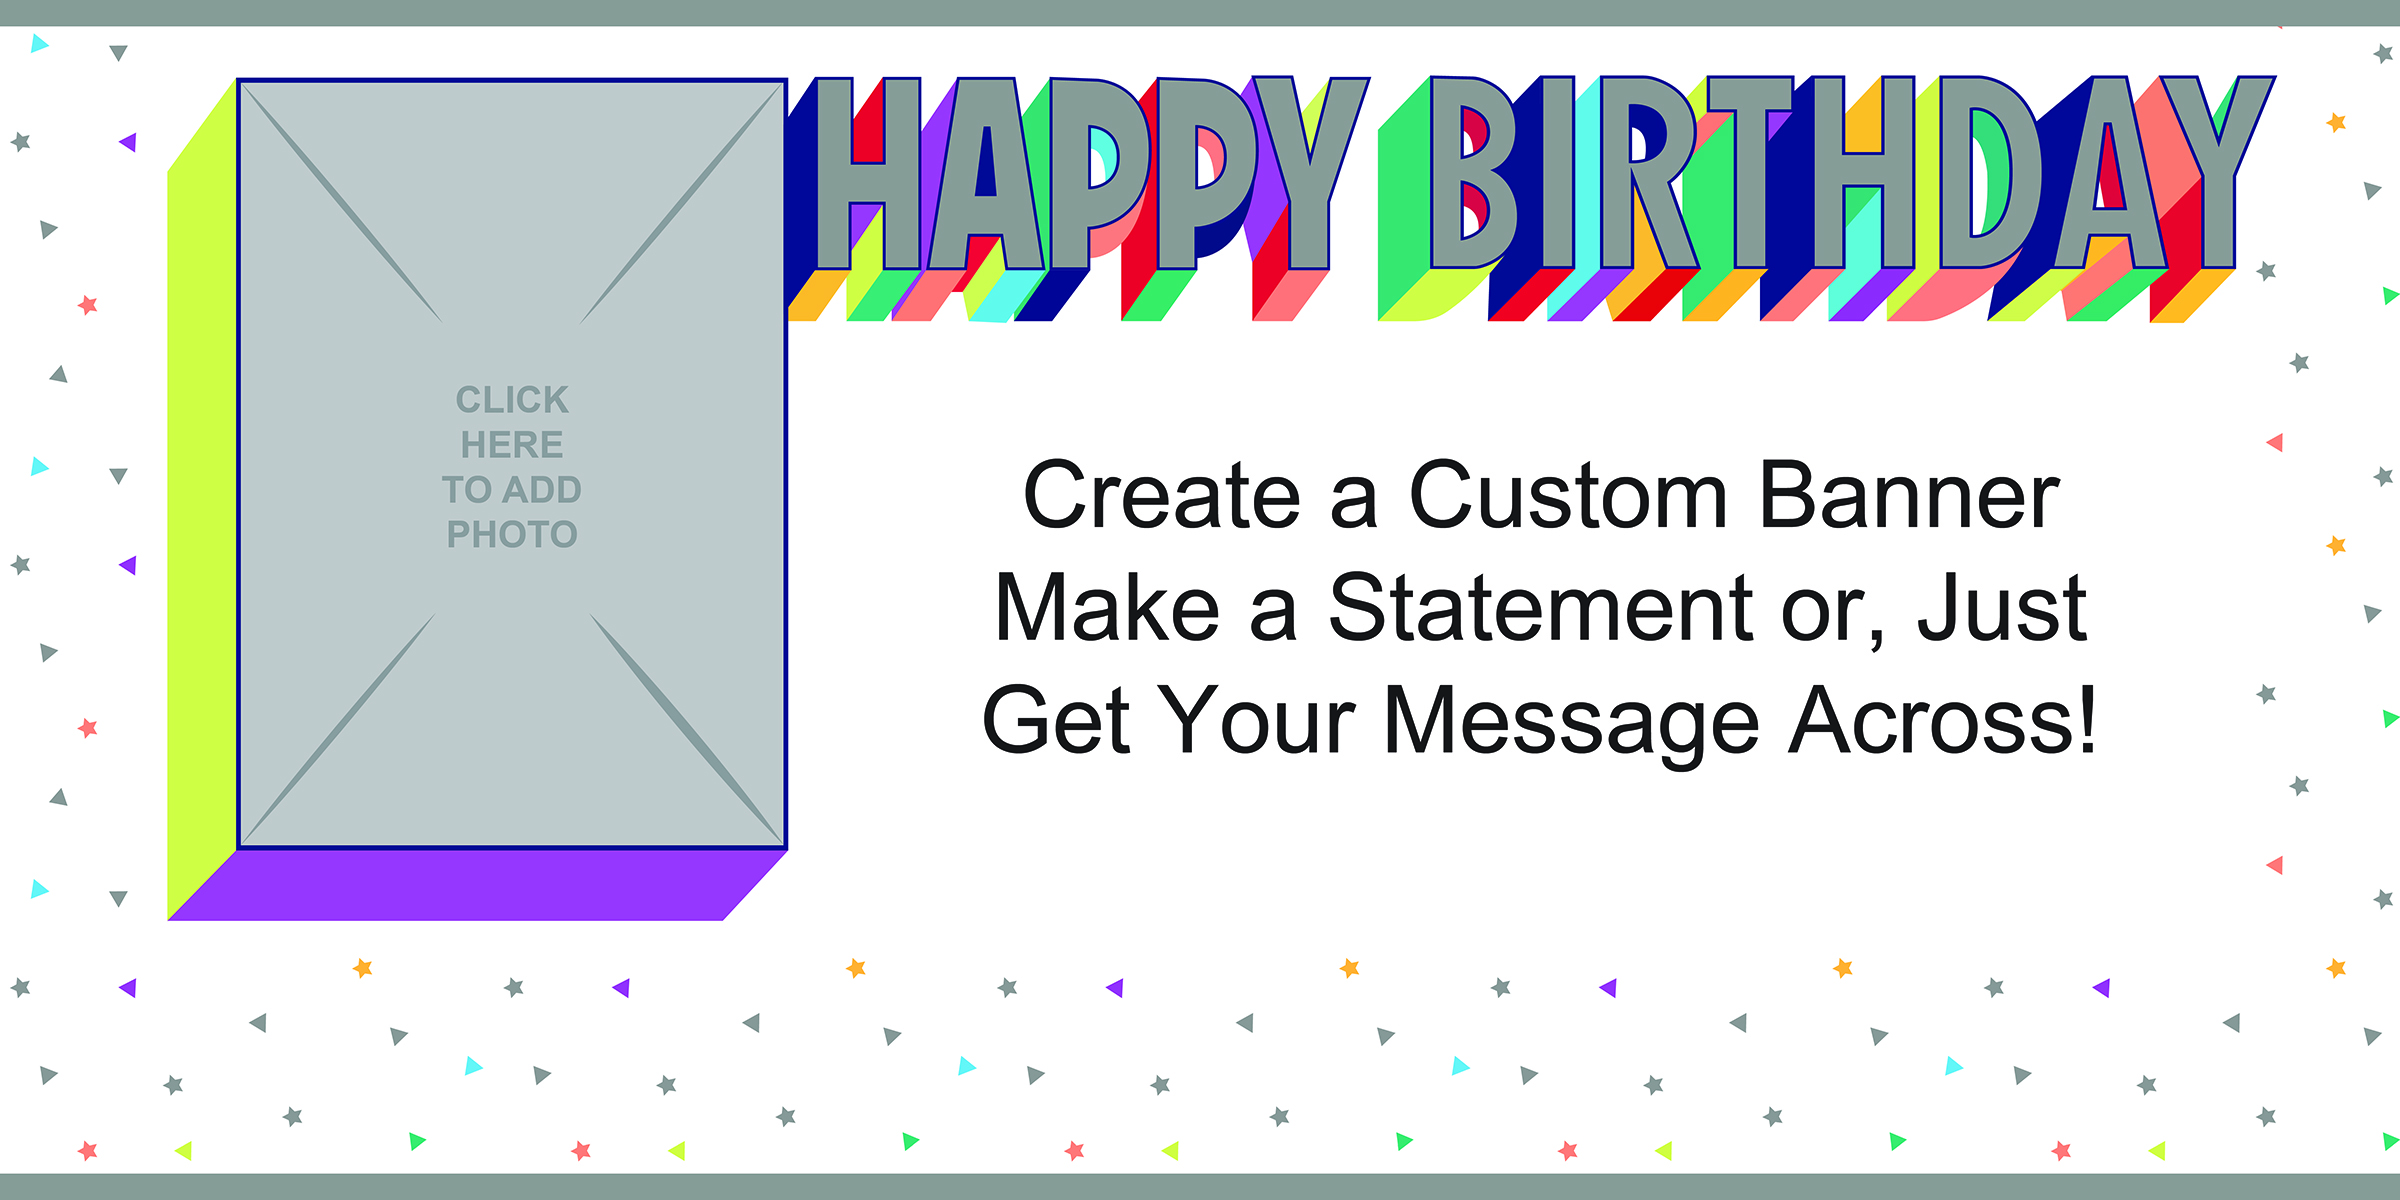 Here's To Your Birthday Photo Custom Banner